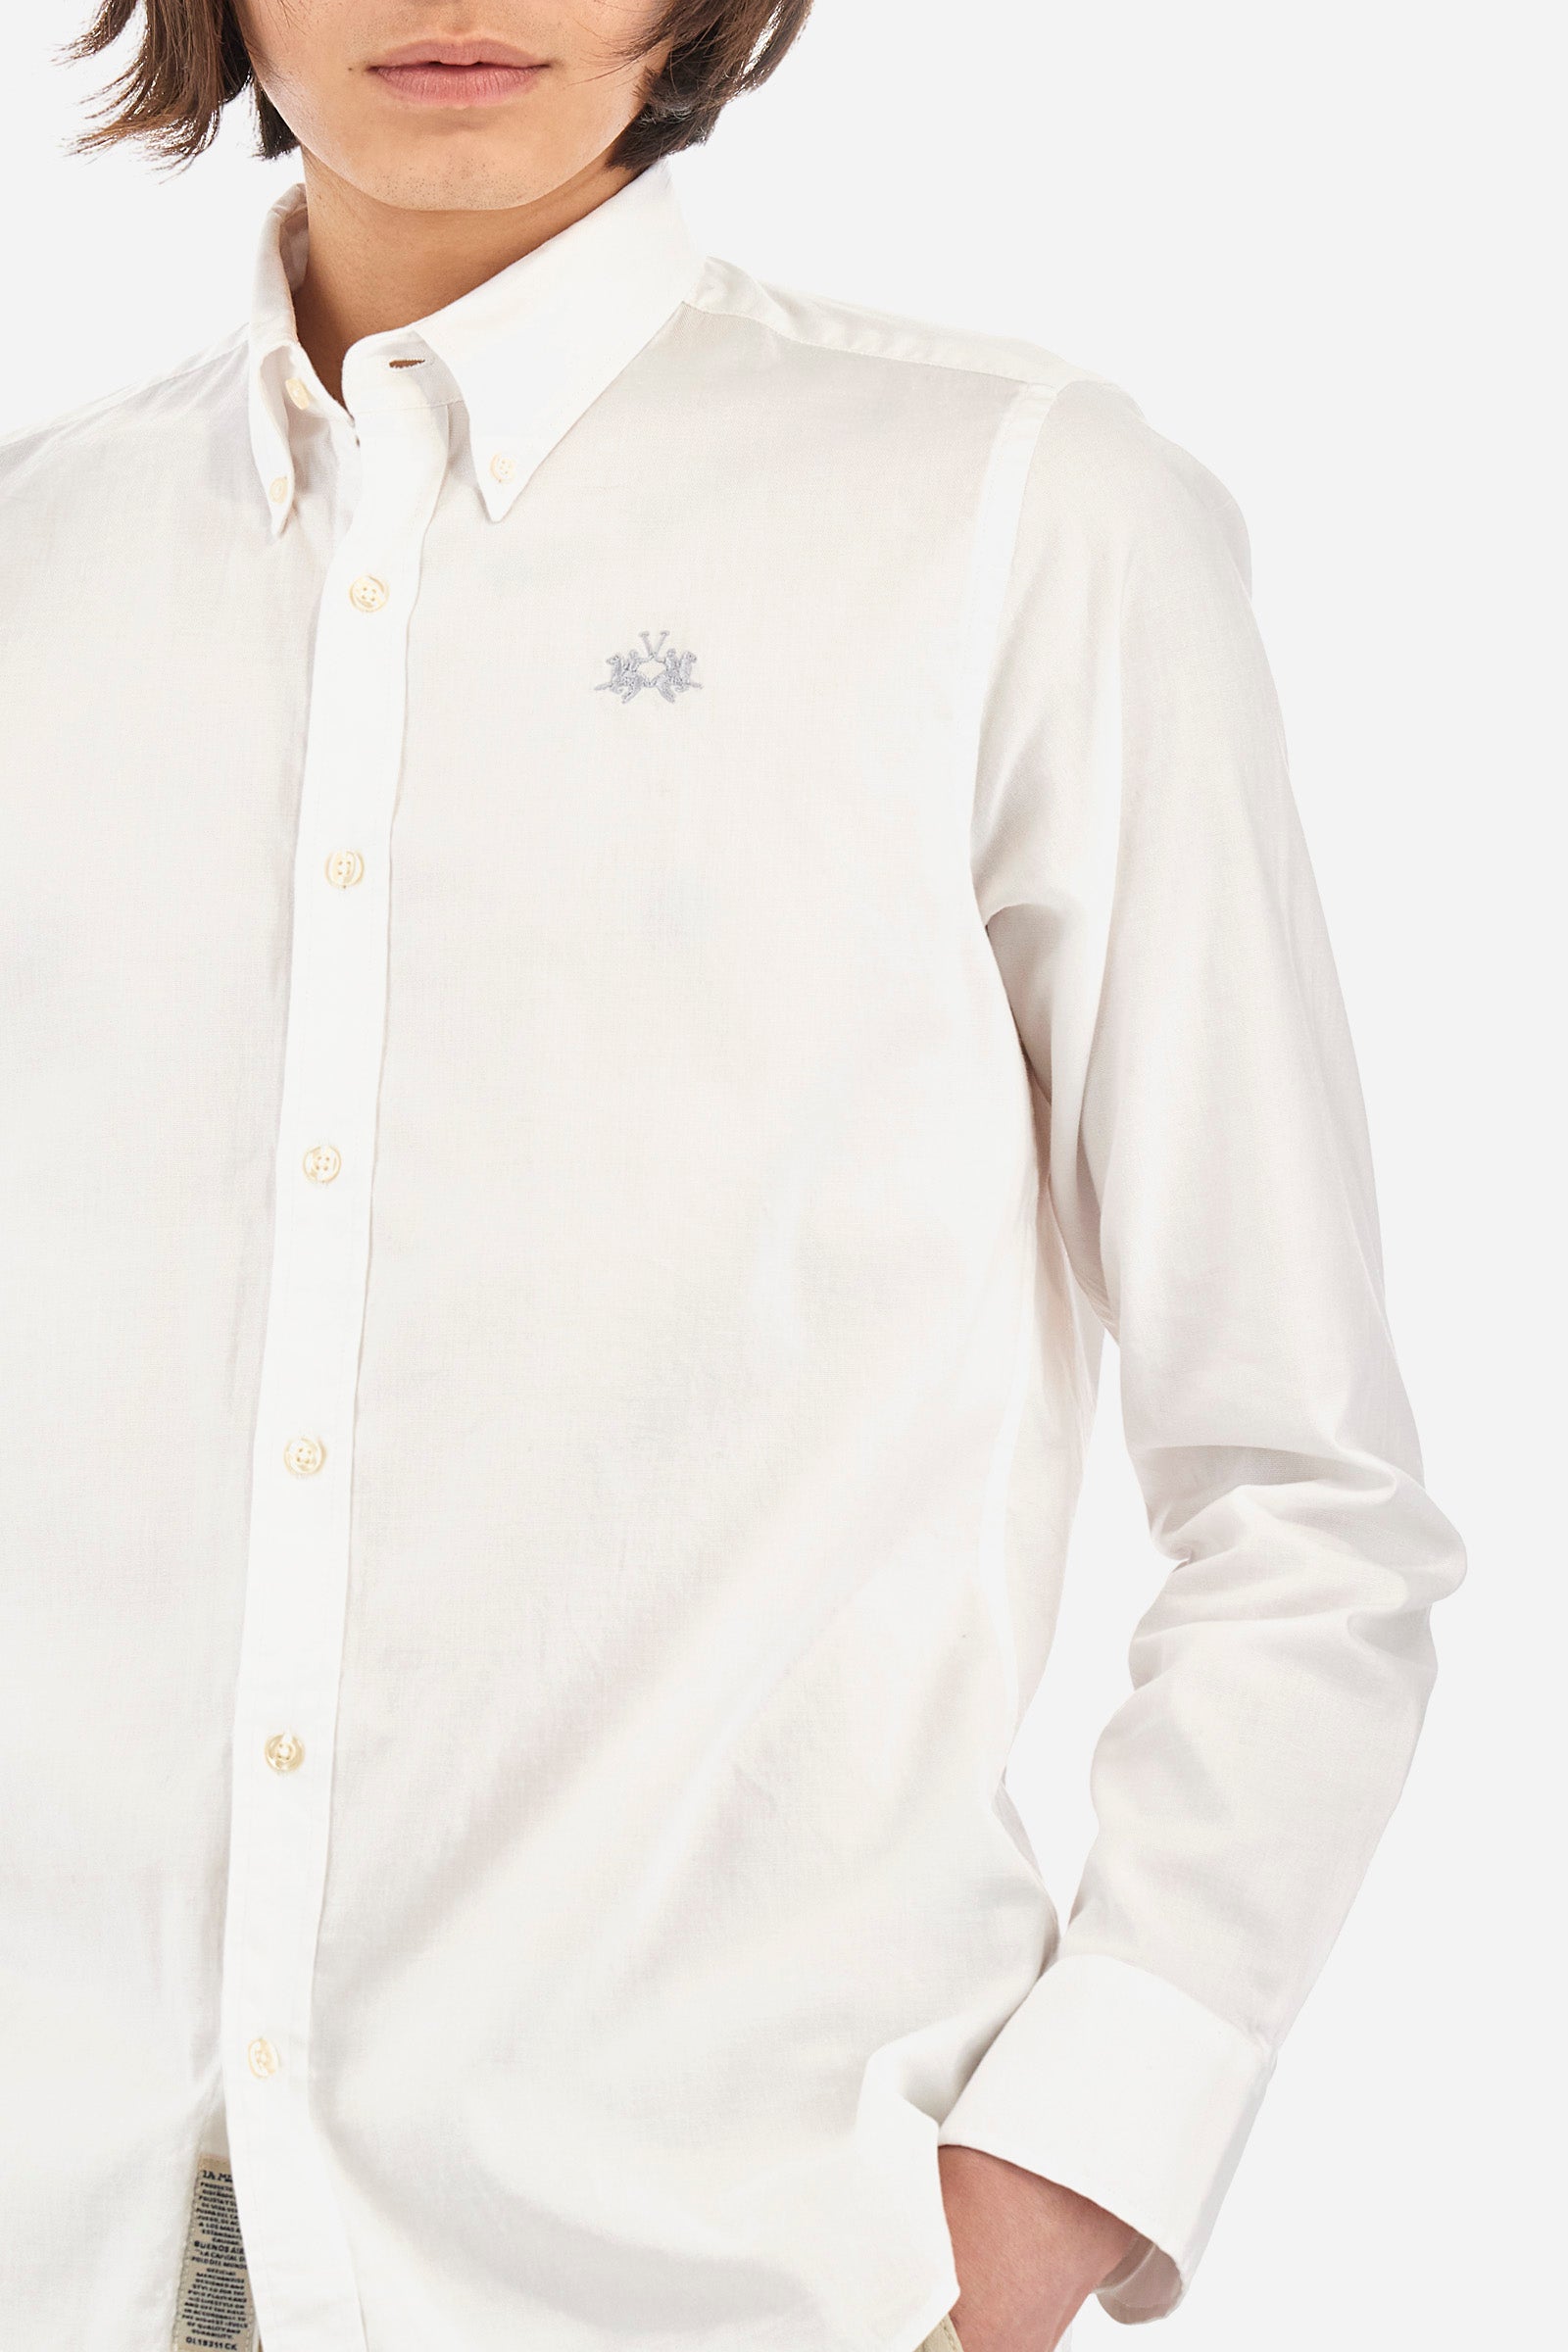 Men’s shirt in cotton slim fit long sleeves